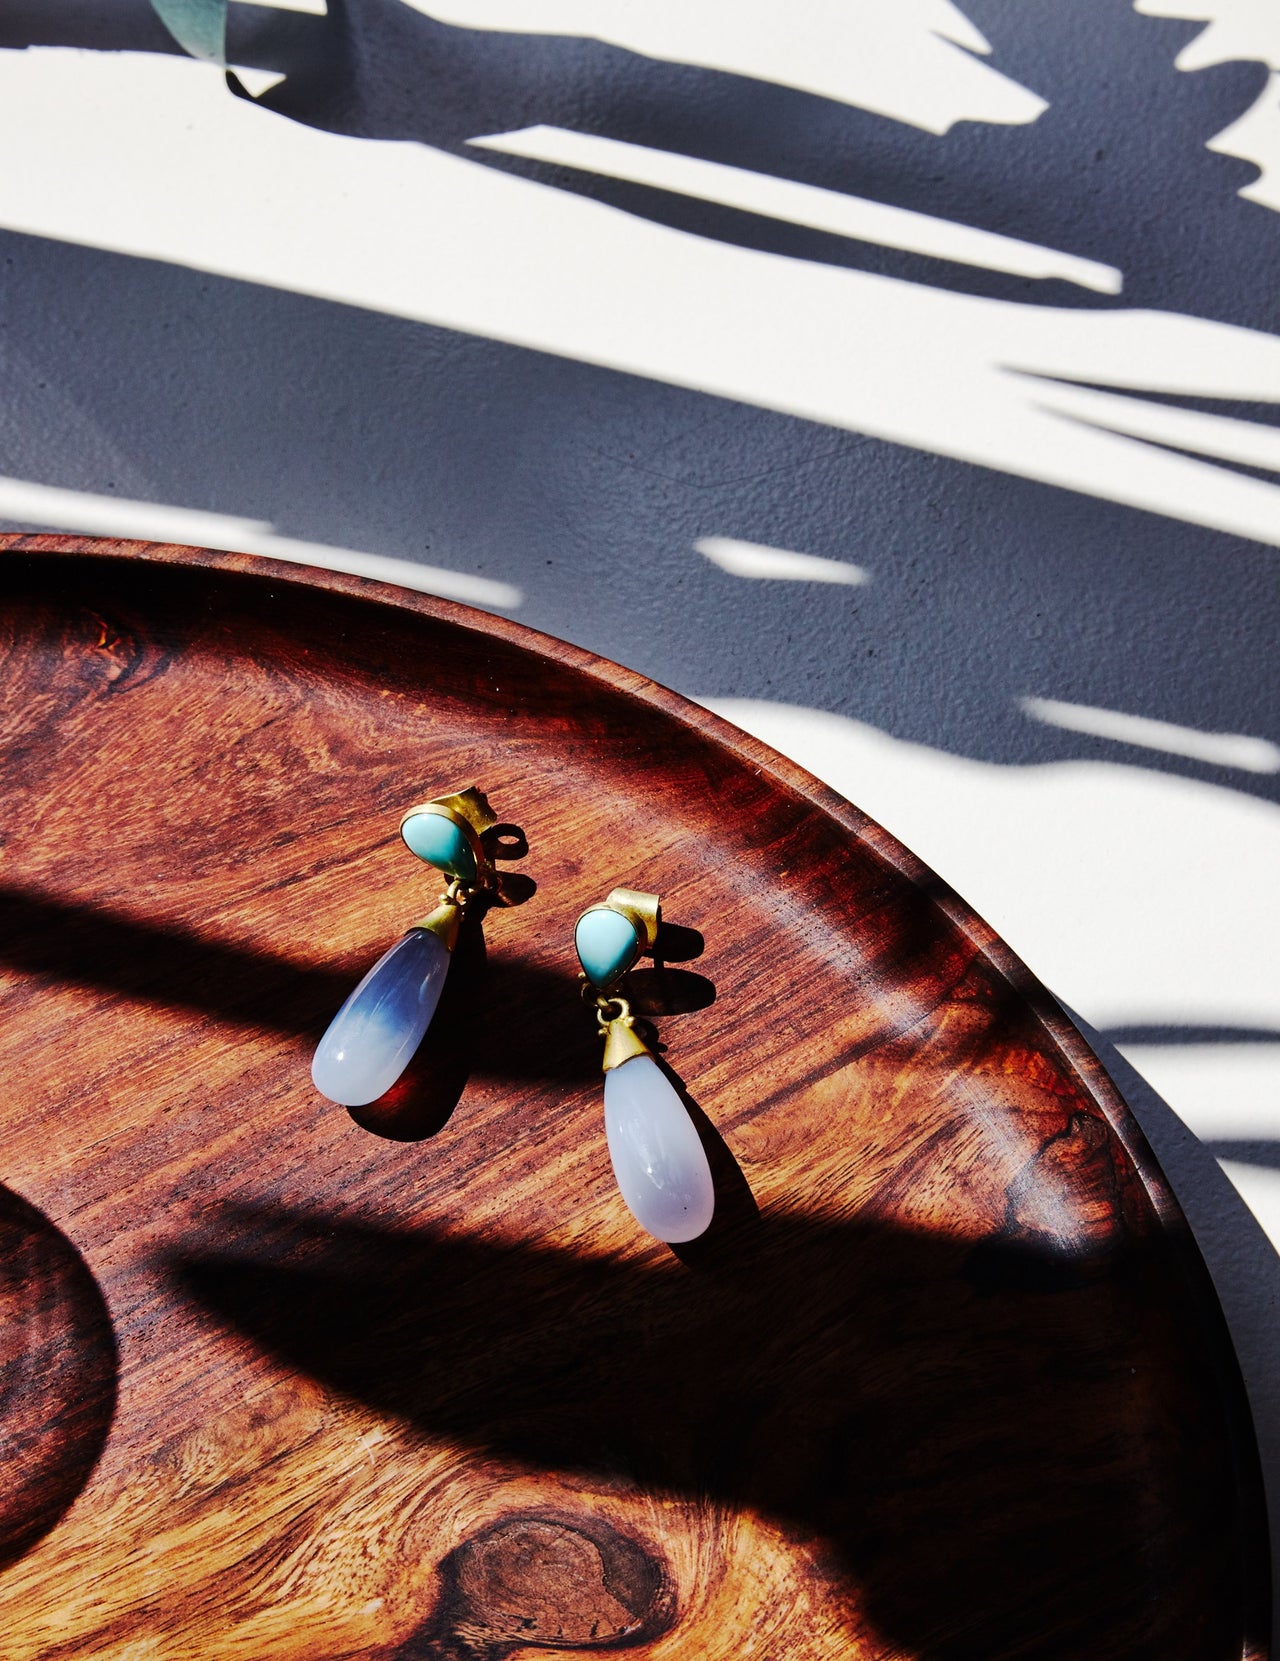  18k Gold Turquoise & Chalcedony Earrings 